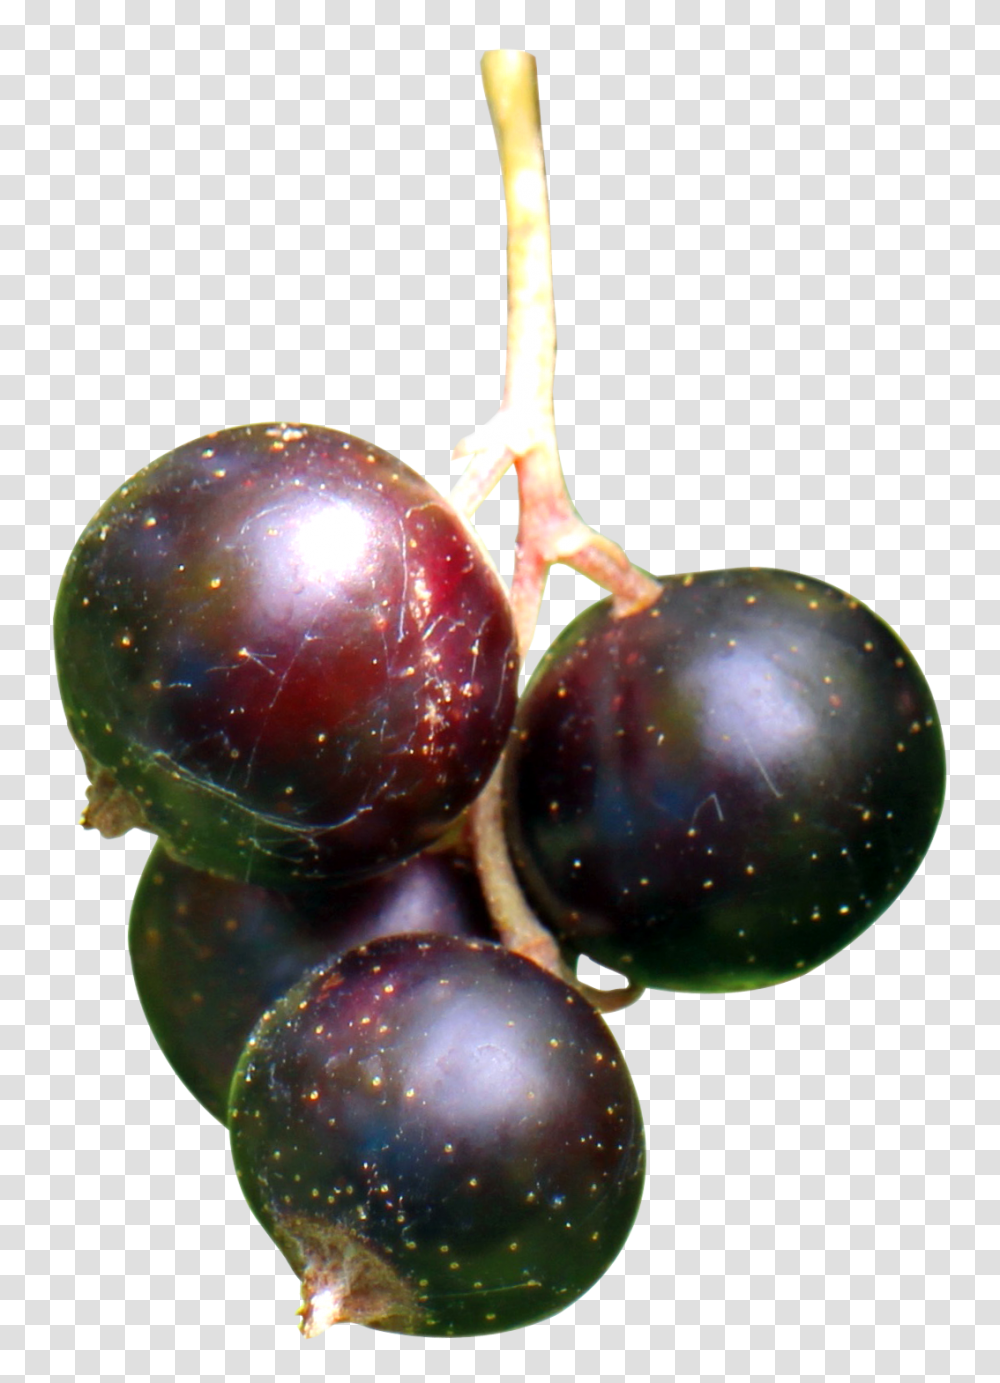 Black Currant Berries Image, Fruit, Plant, Food, Plum Transparent Png